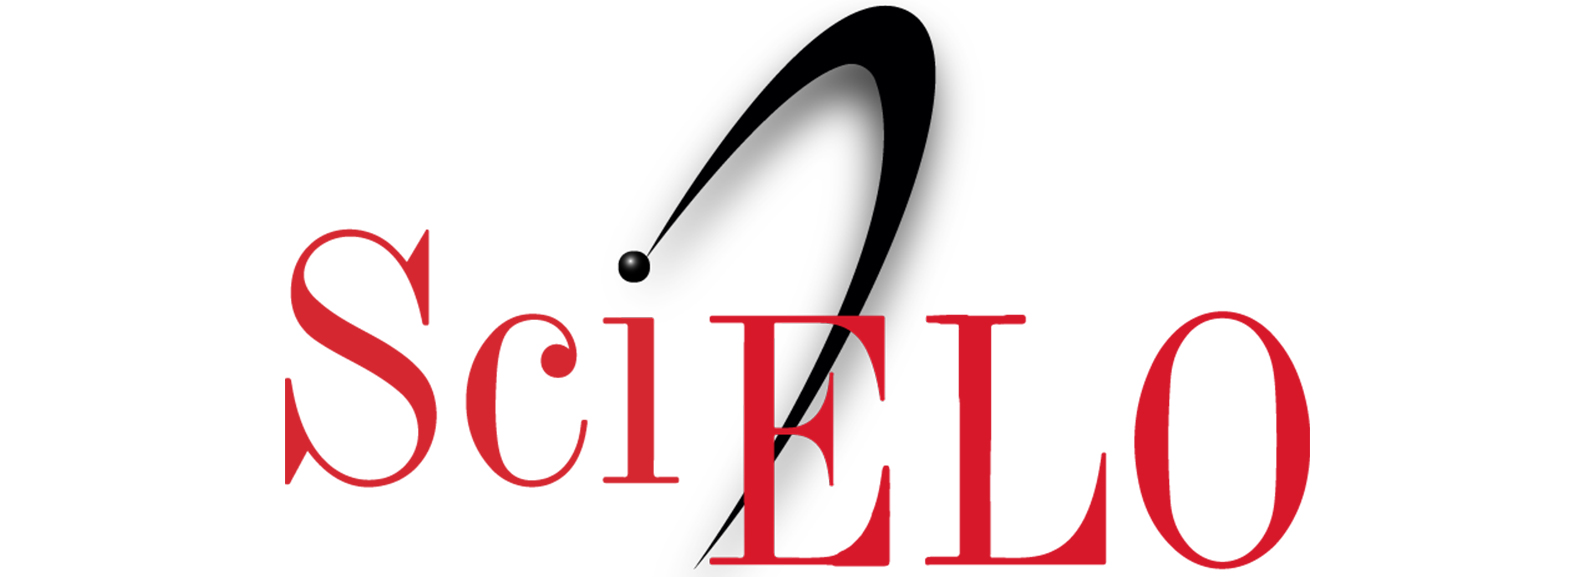 SciELO (Scientific Electronic Library Online)